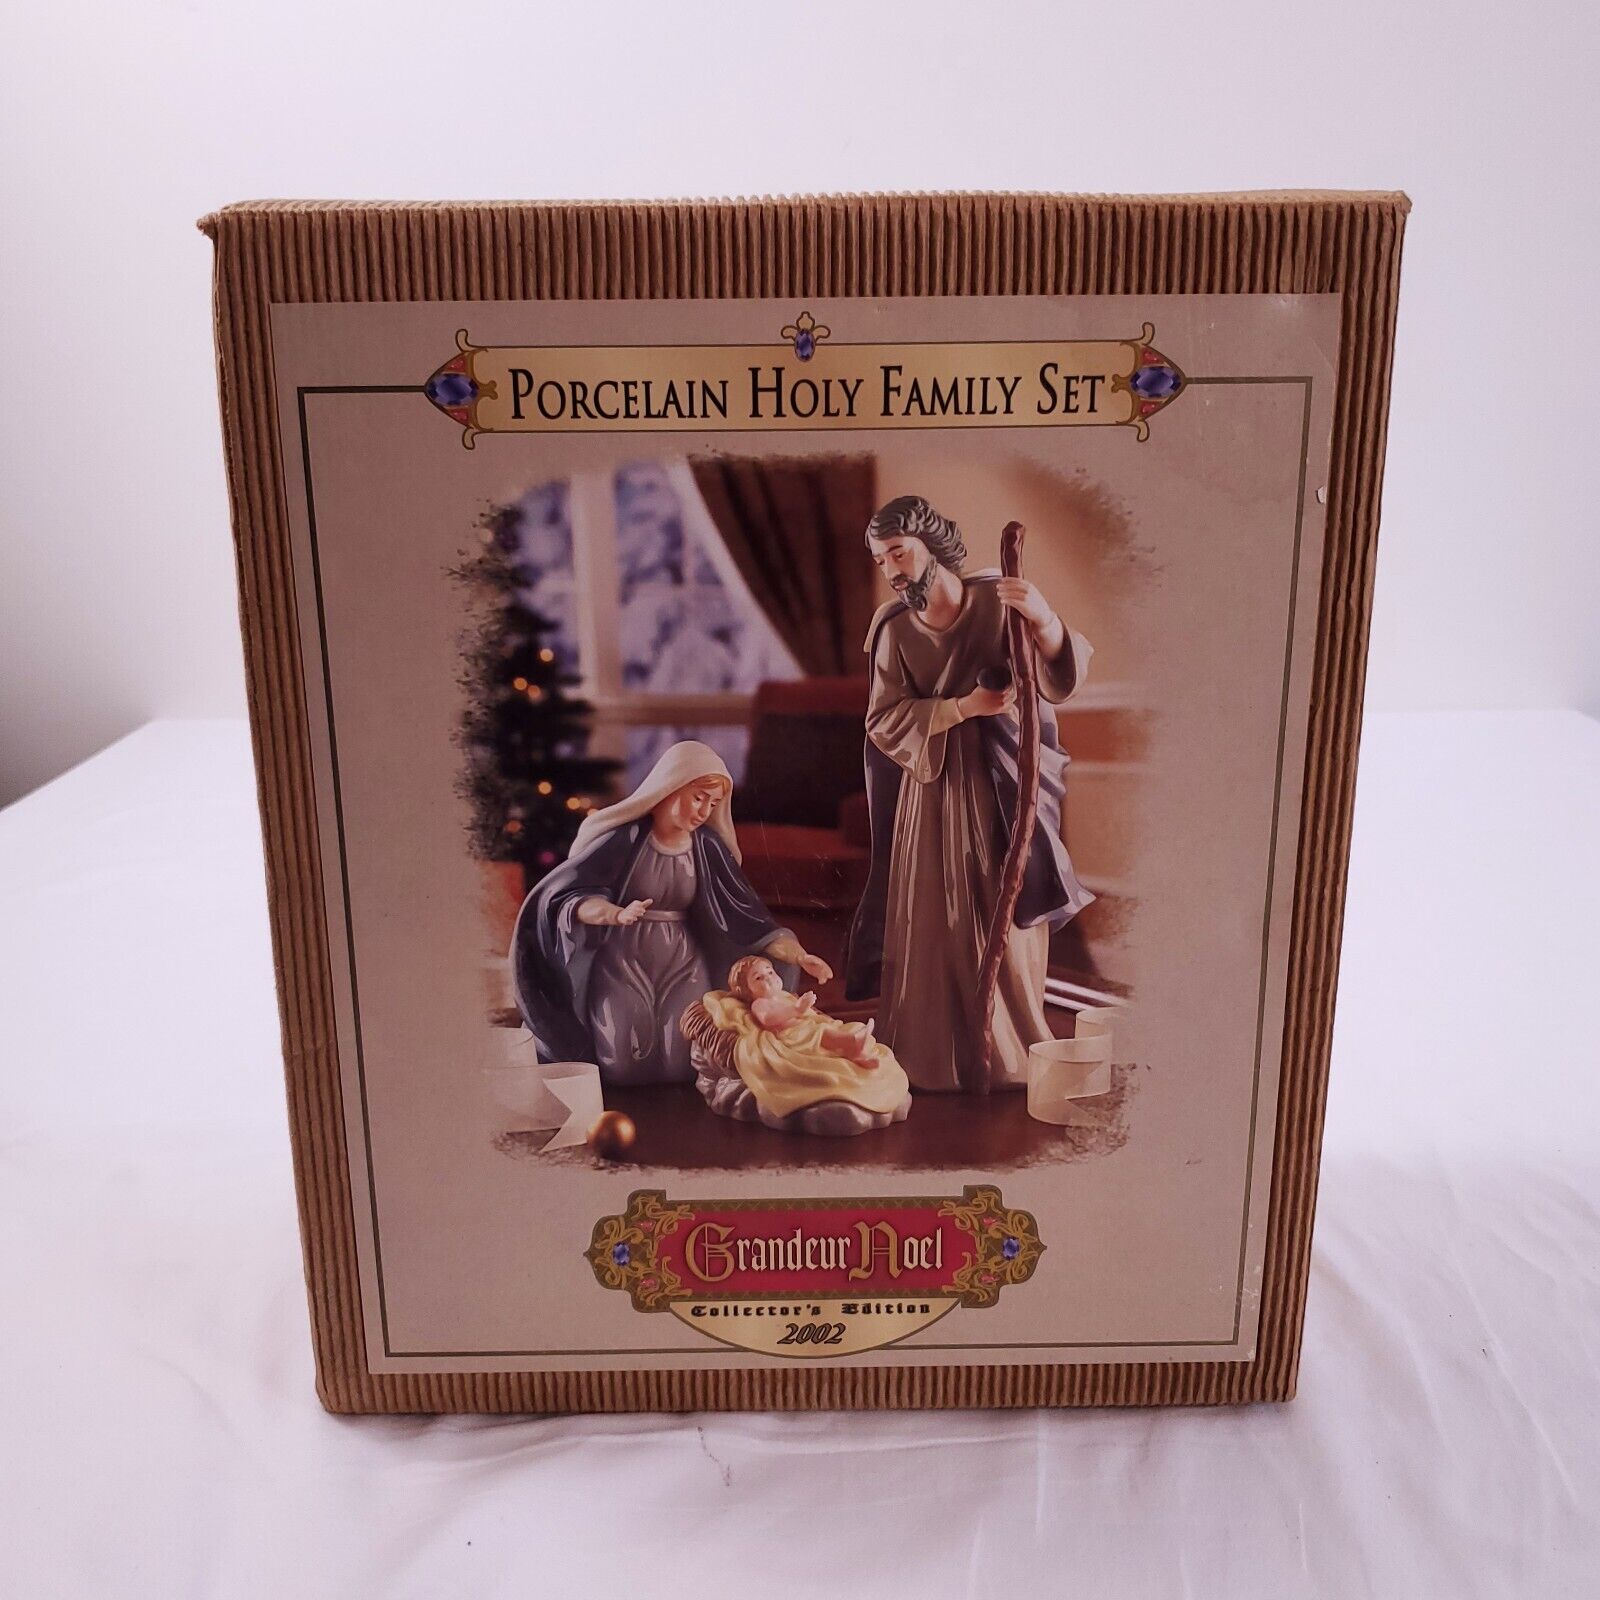 Grandeur Noel Porcelain Holy Family Nativity Set Collector's Edition 2002